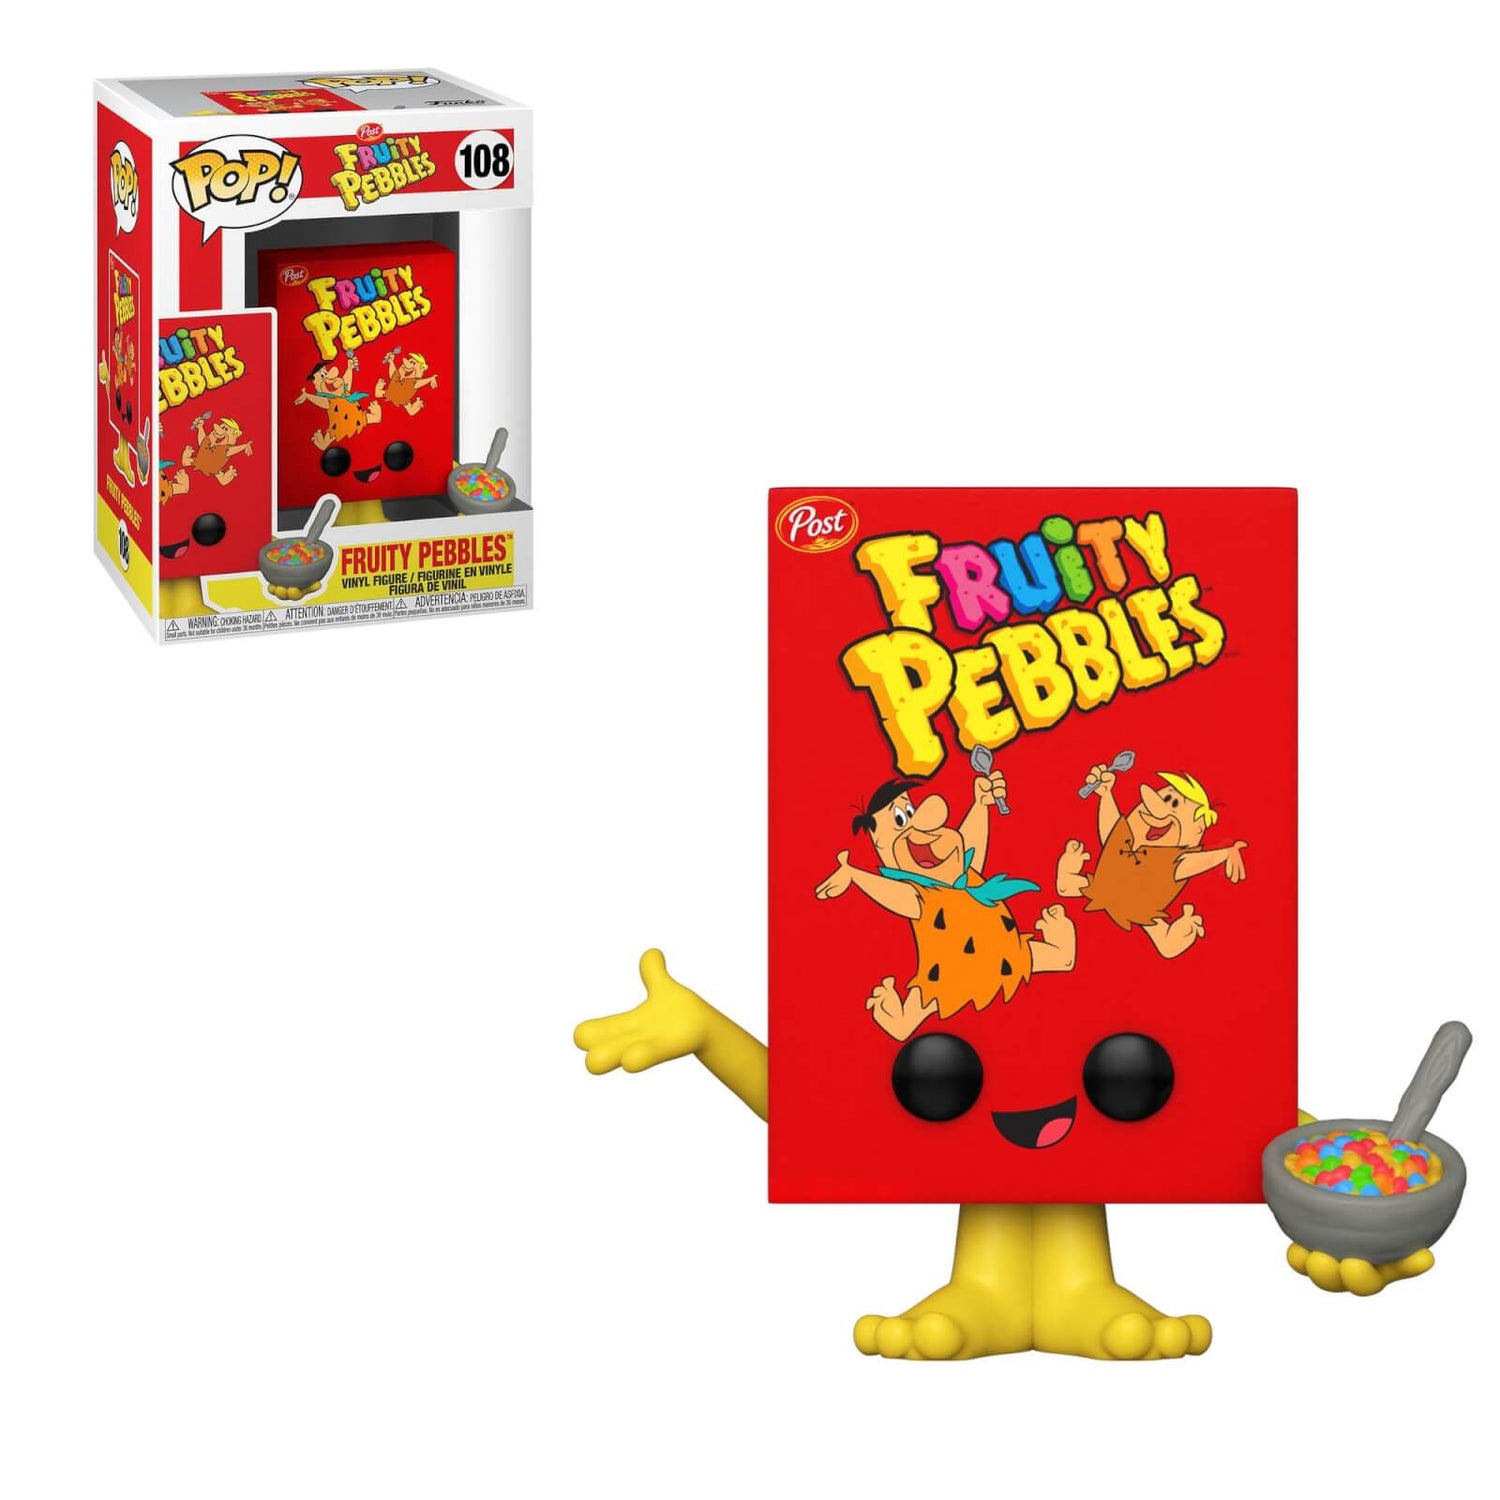 Post fruit Pebbles Cereal Box Funko Pop! Vinyl